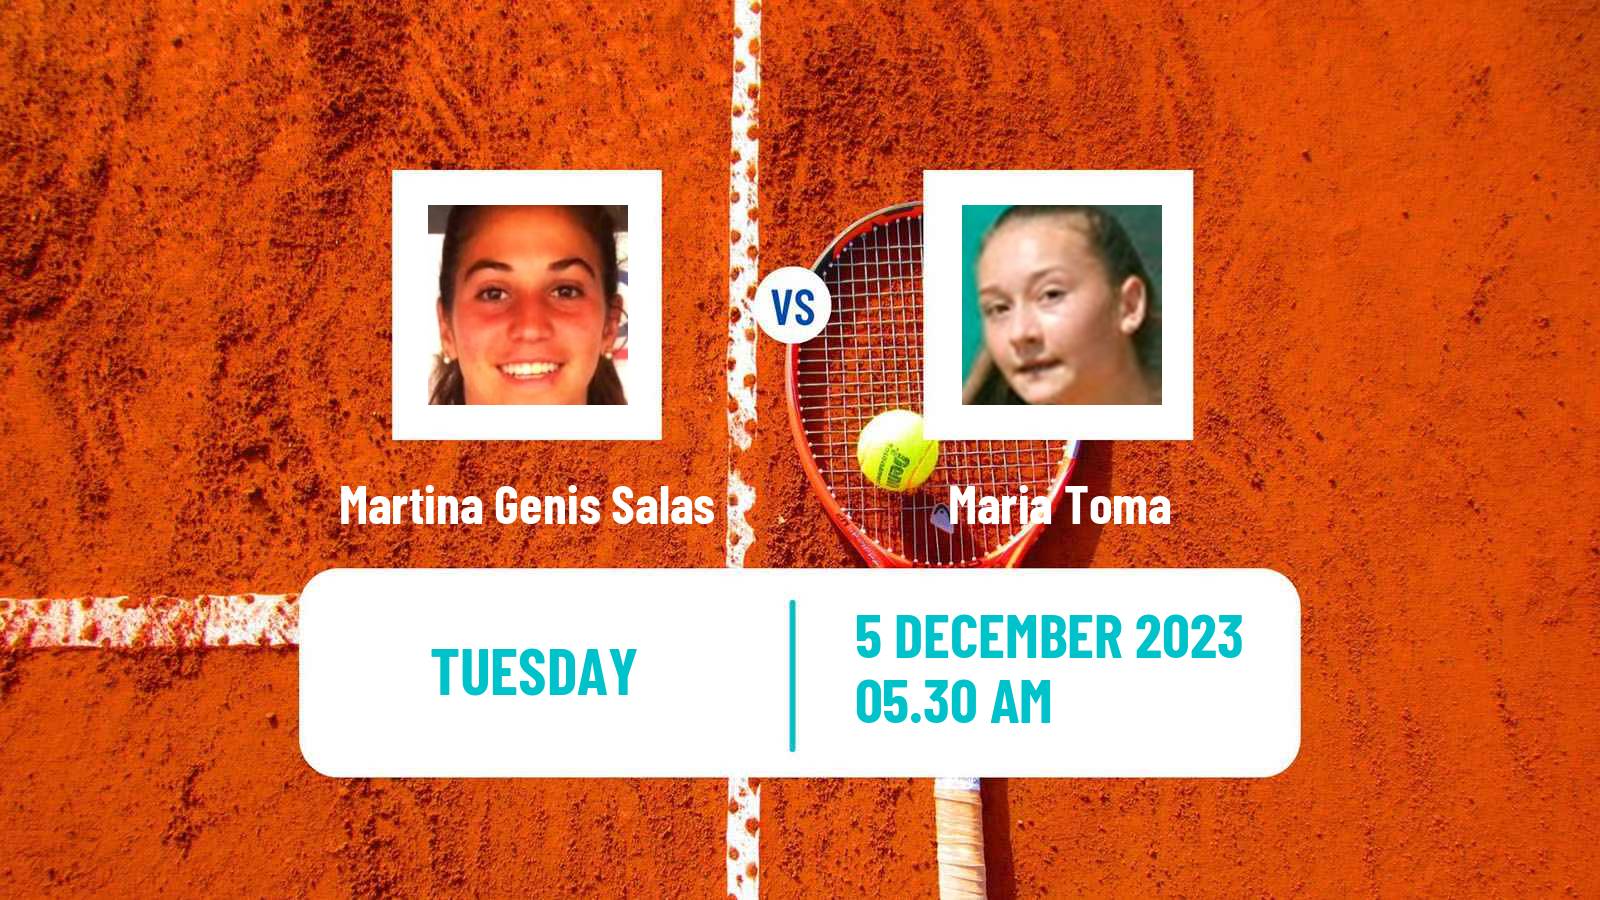 Tennis ITF W15 Valencia 3 Women 2023 Martina Genis Salas - Maria Toma